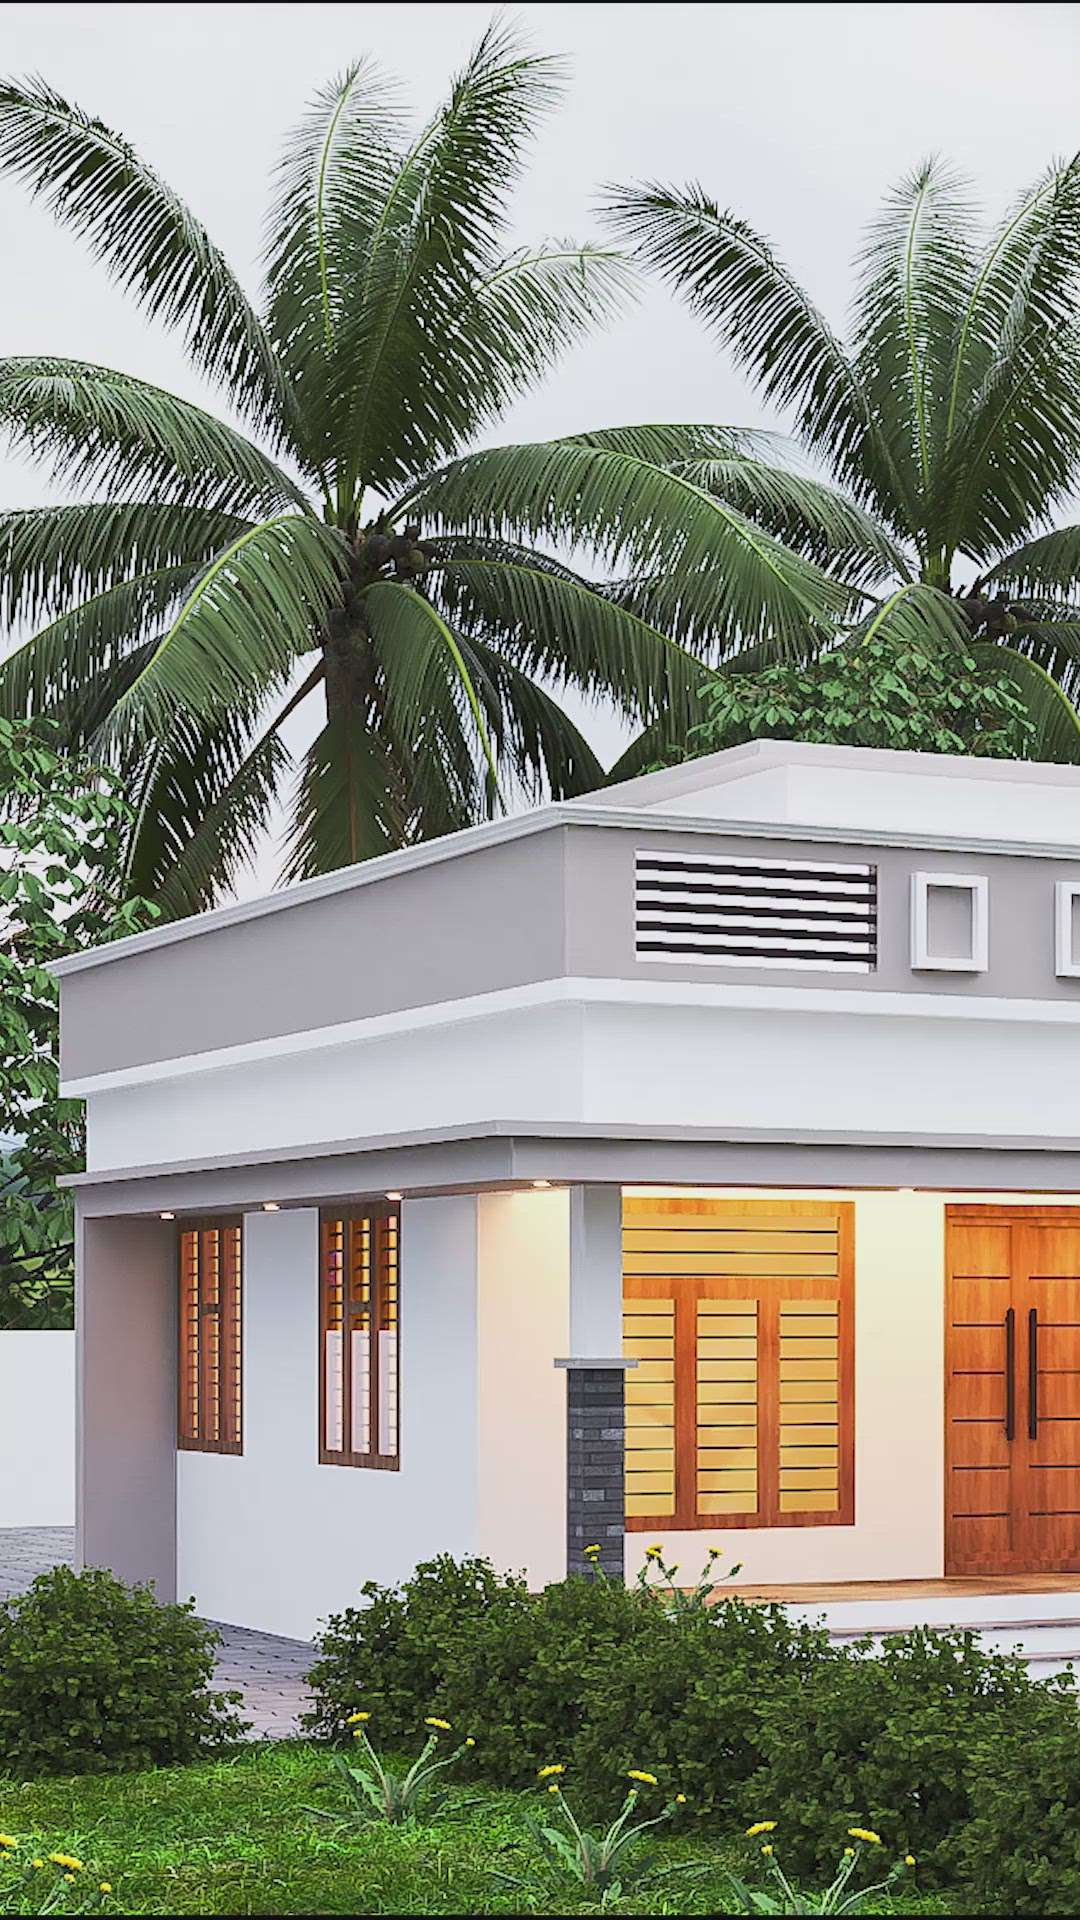 New Project
#budgethomes 
#ContemporaryHouse 
#KeralaStyleHouse